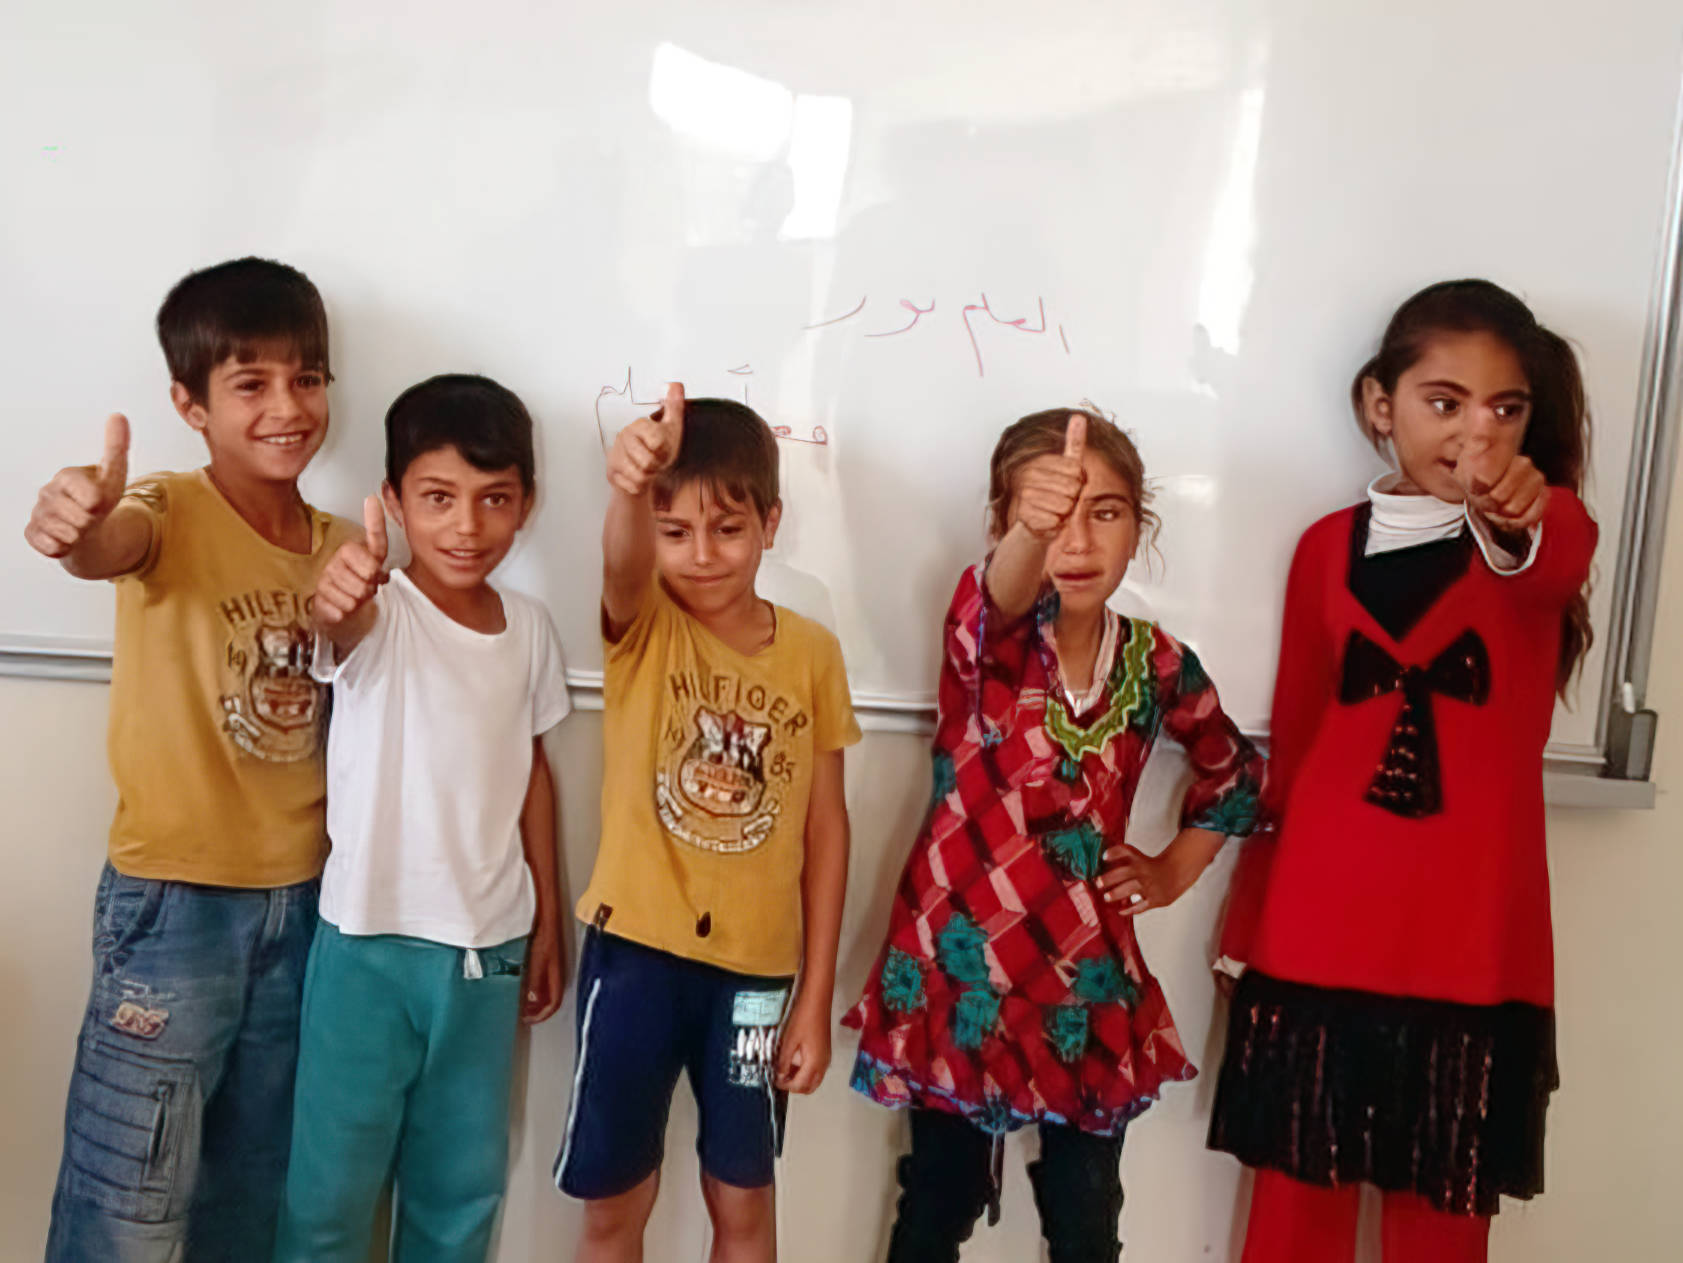 5 Kinder im Grundschulalter vor Whiteboard